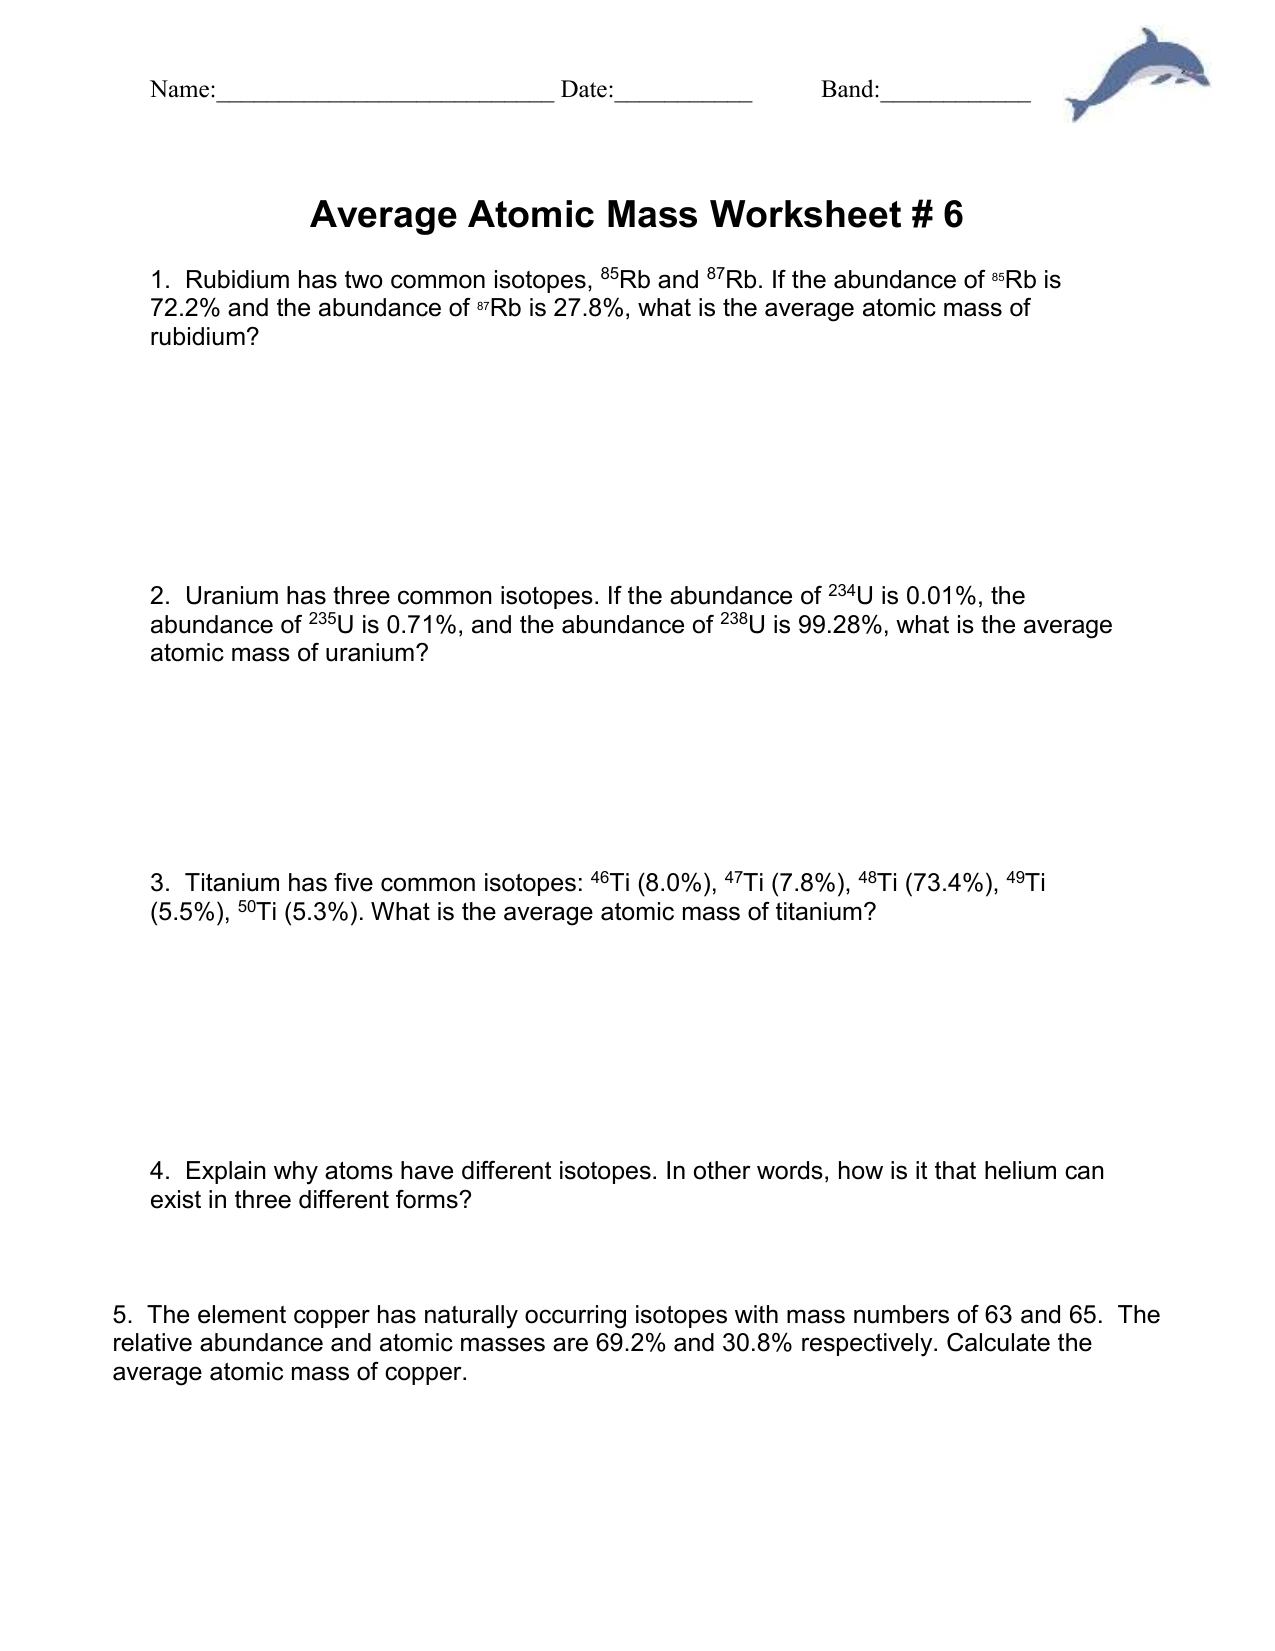 Ch 25 Average atomic mass worksheet Inside Calculating Average Atomic Mass Worksheet